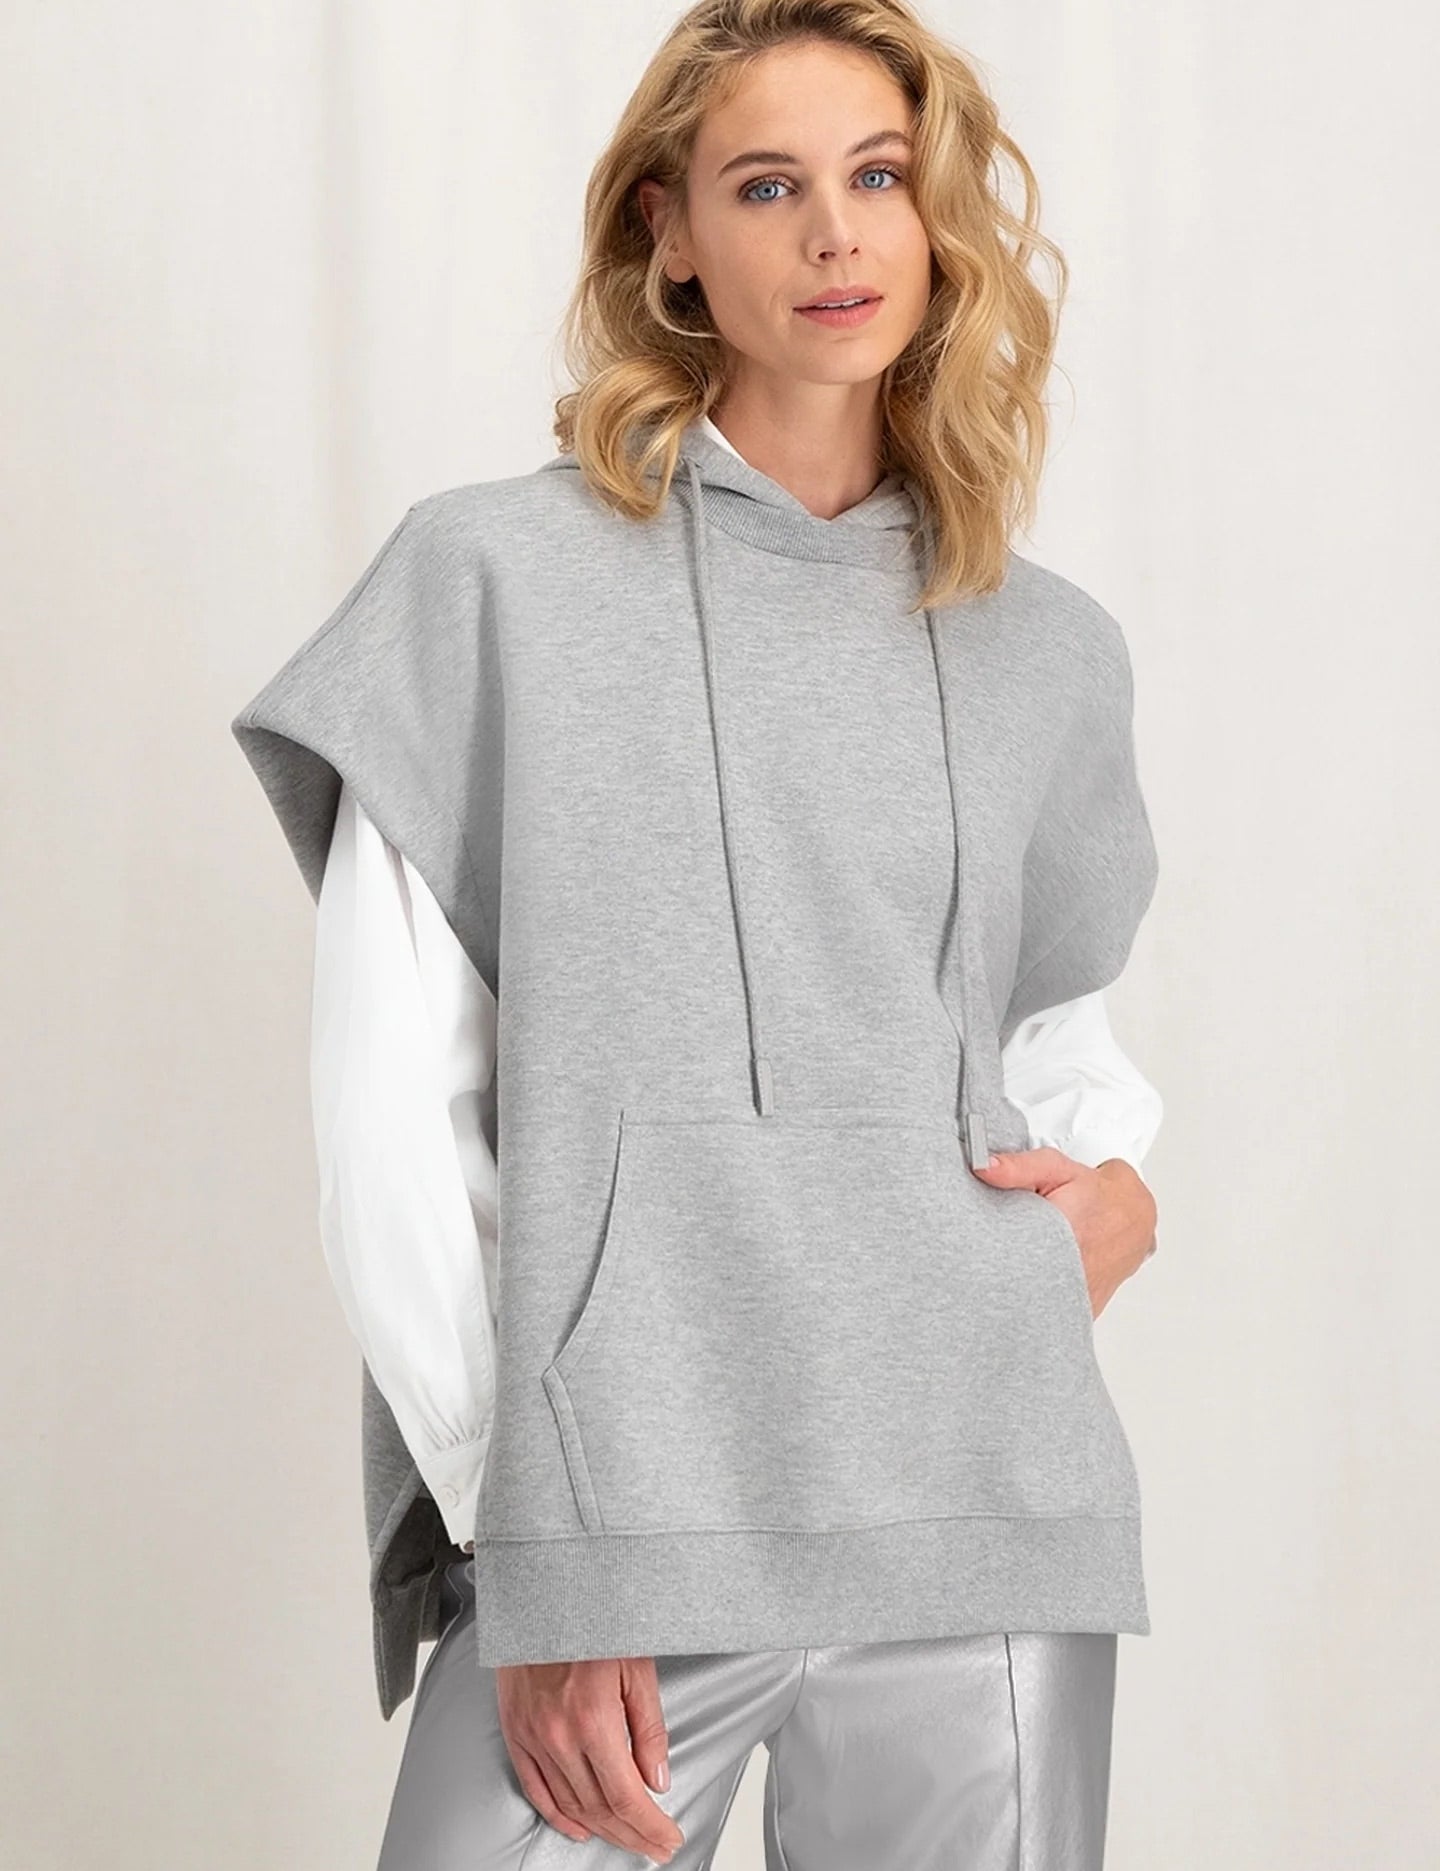 sleeveless-hoodie-with-pockets-and-drawstring-in-wide-fit-grey-melange_2880x_jpg.jpg